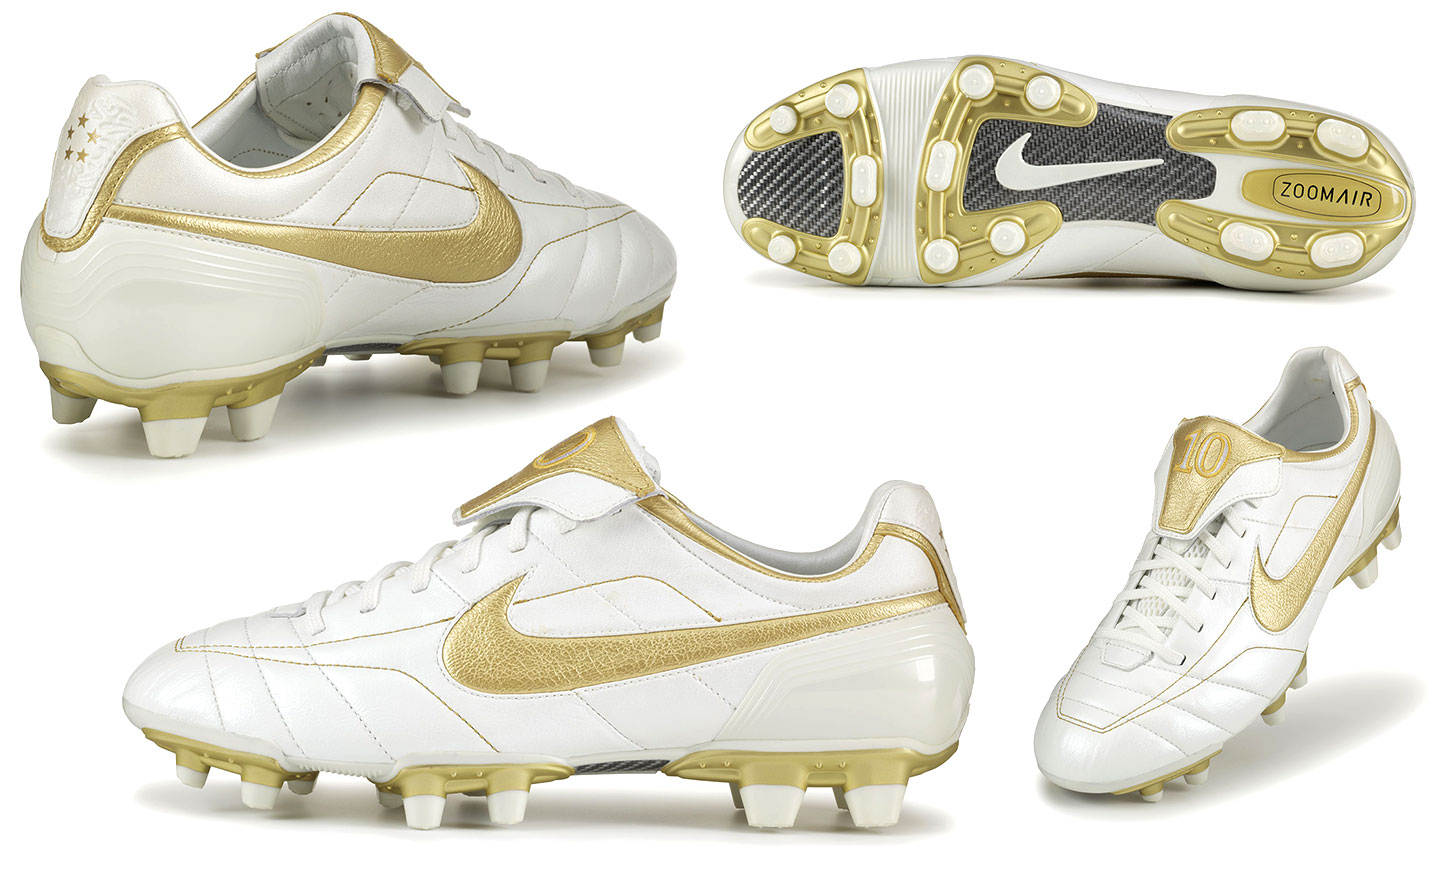 Nike Football Ronaldino Tiempo Gold soccer cleats 2005